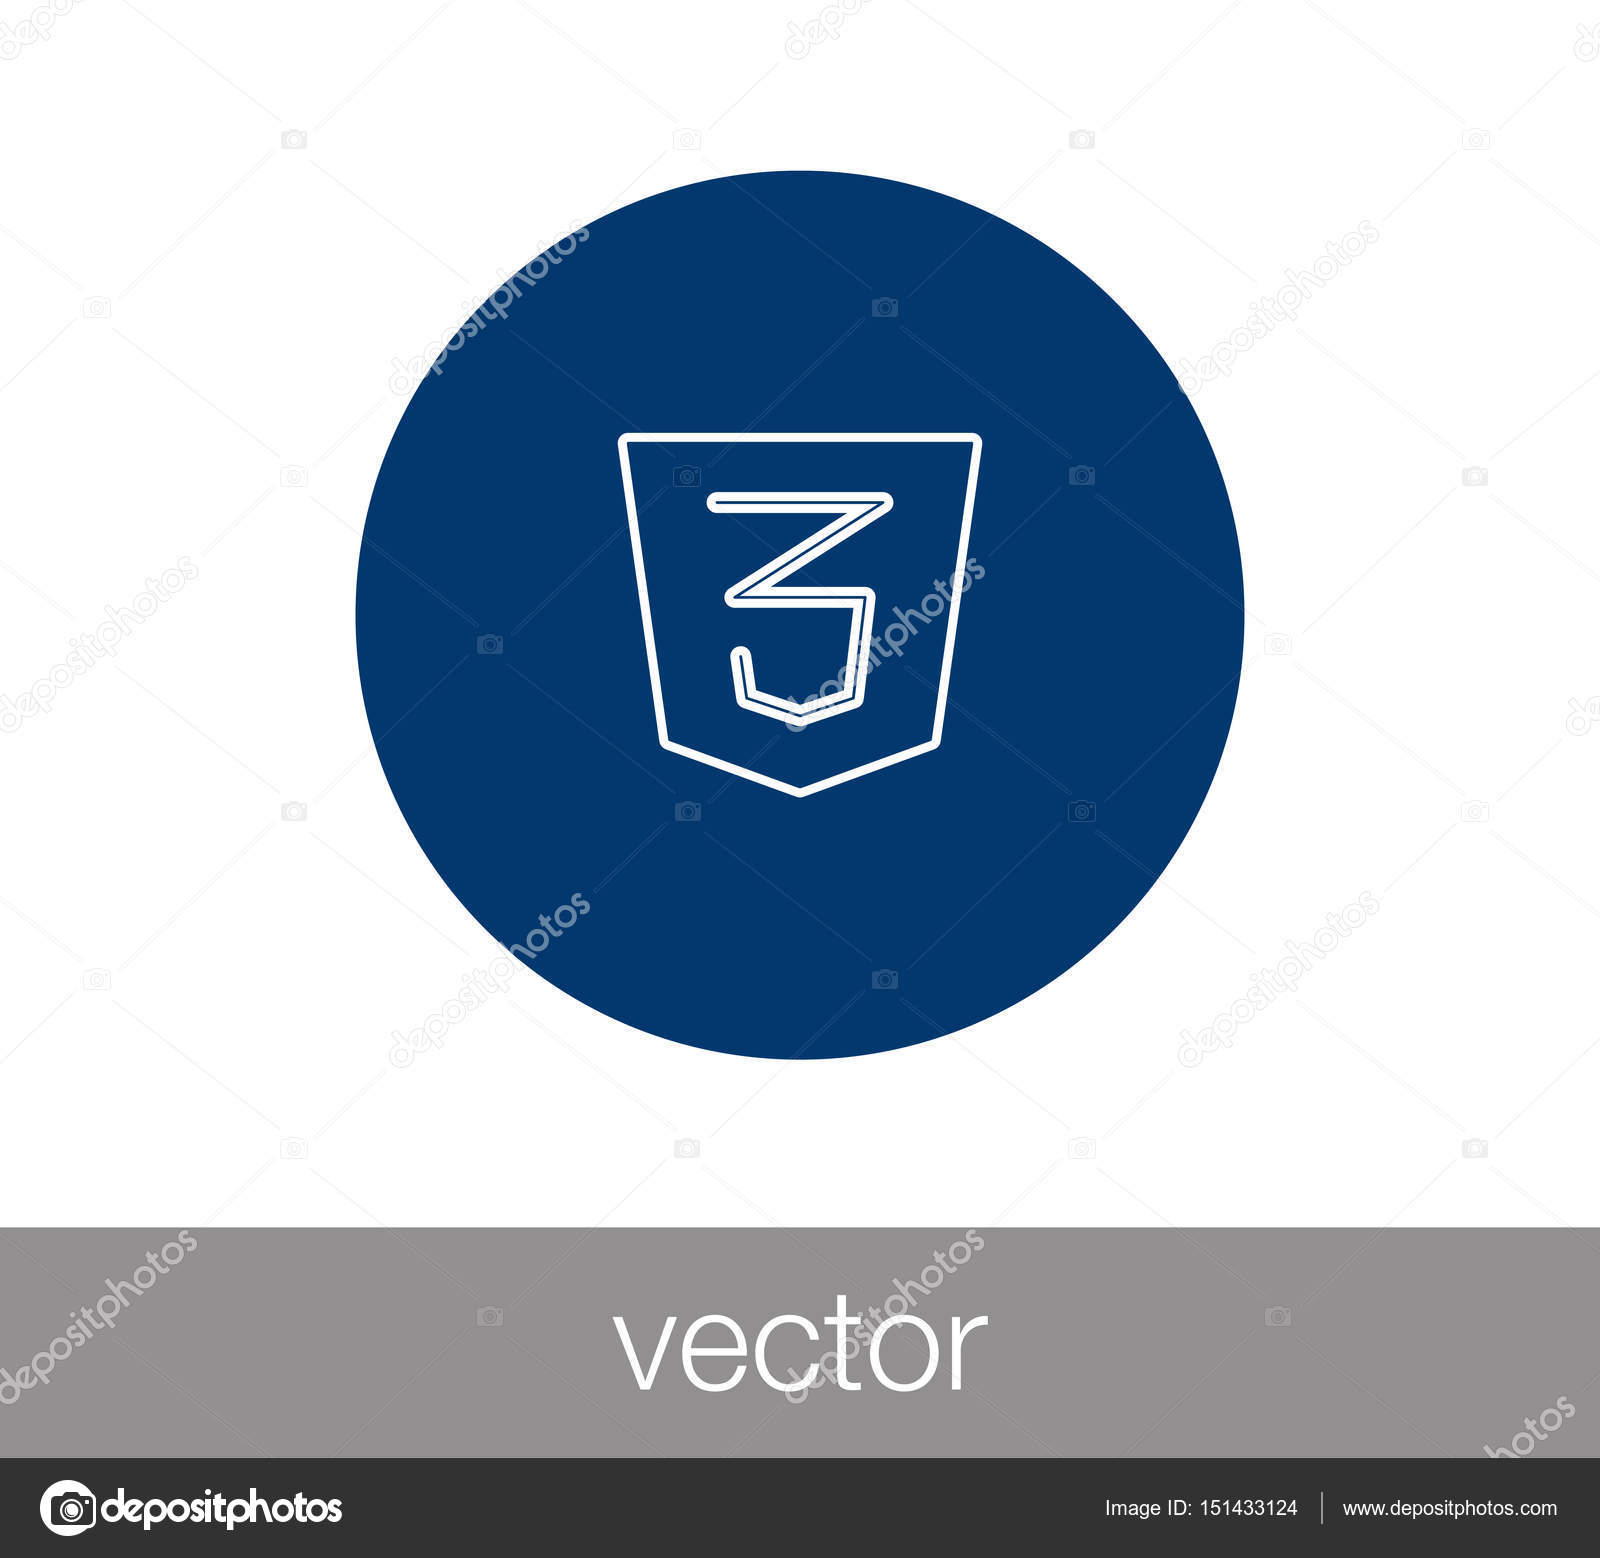 CSS3 Valid Logos - Icon Deposit